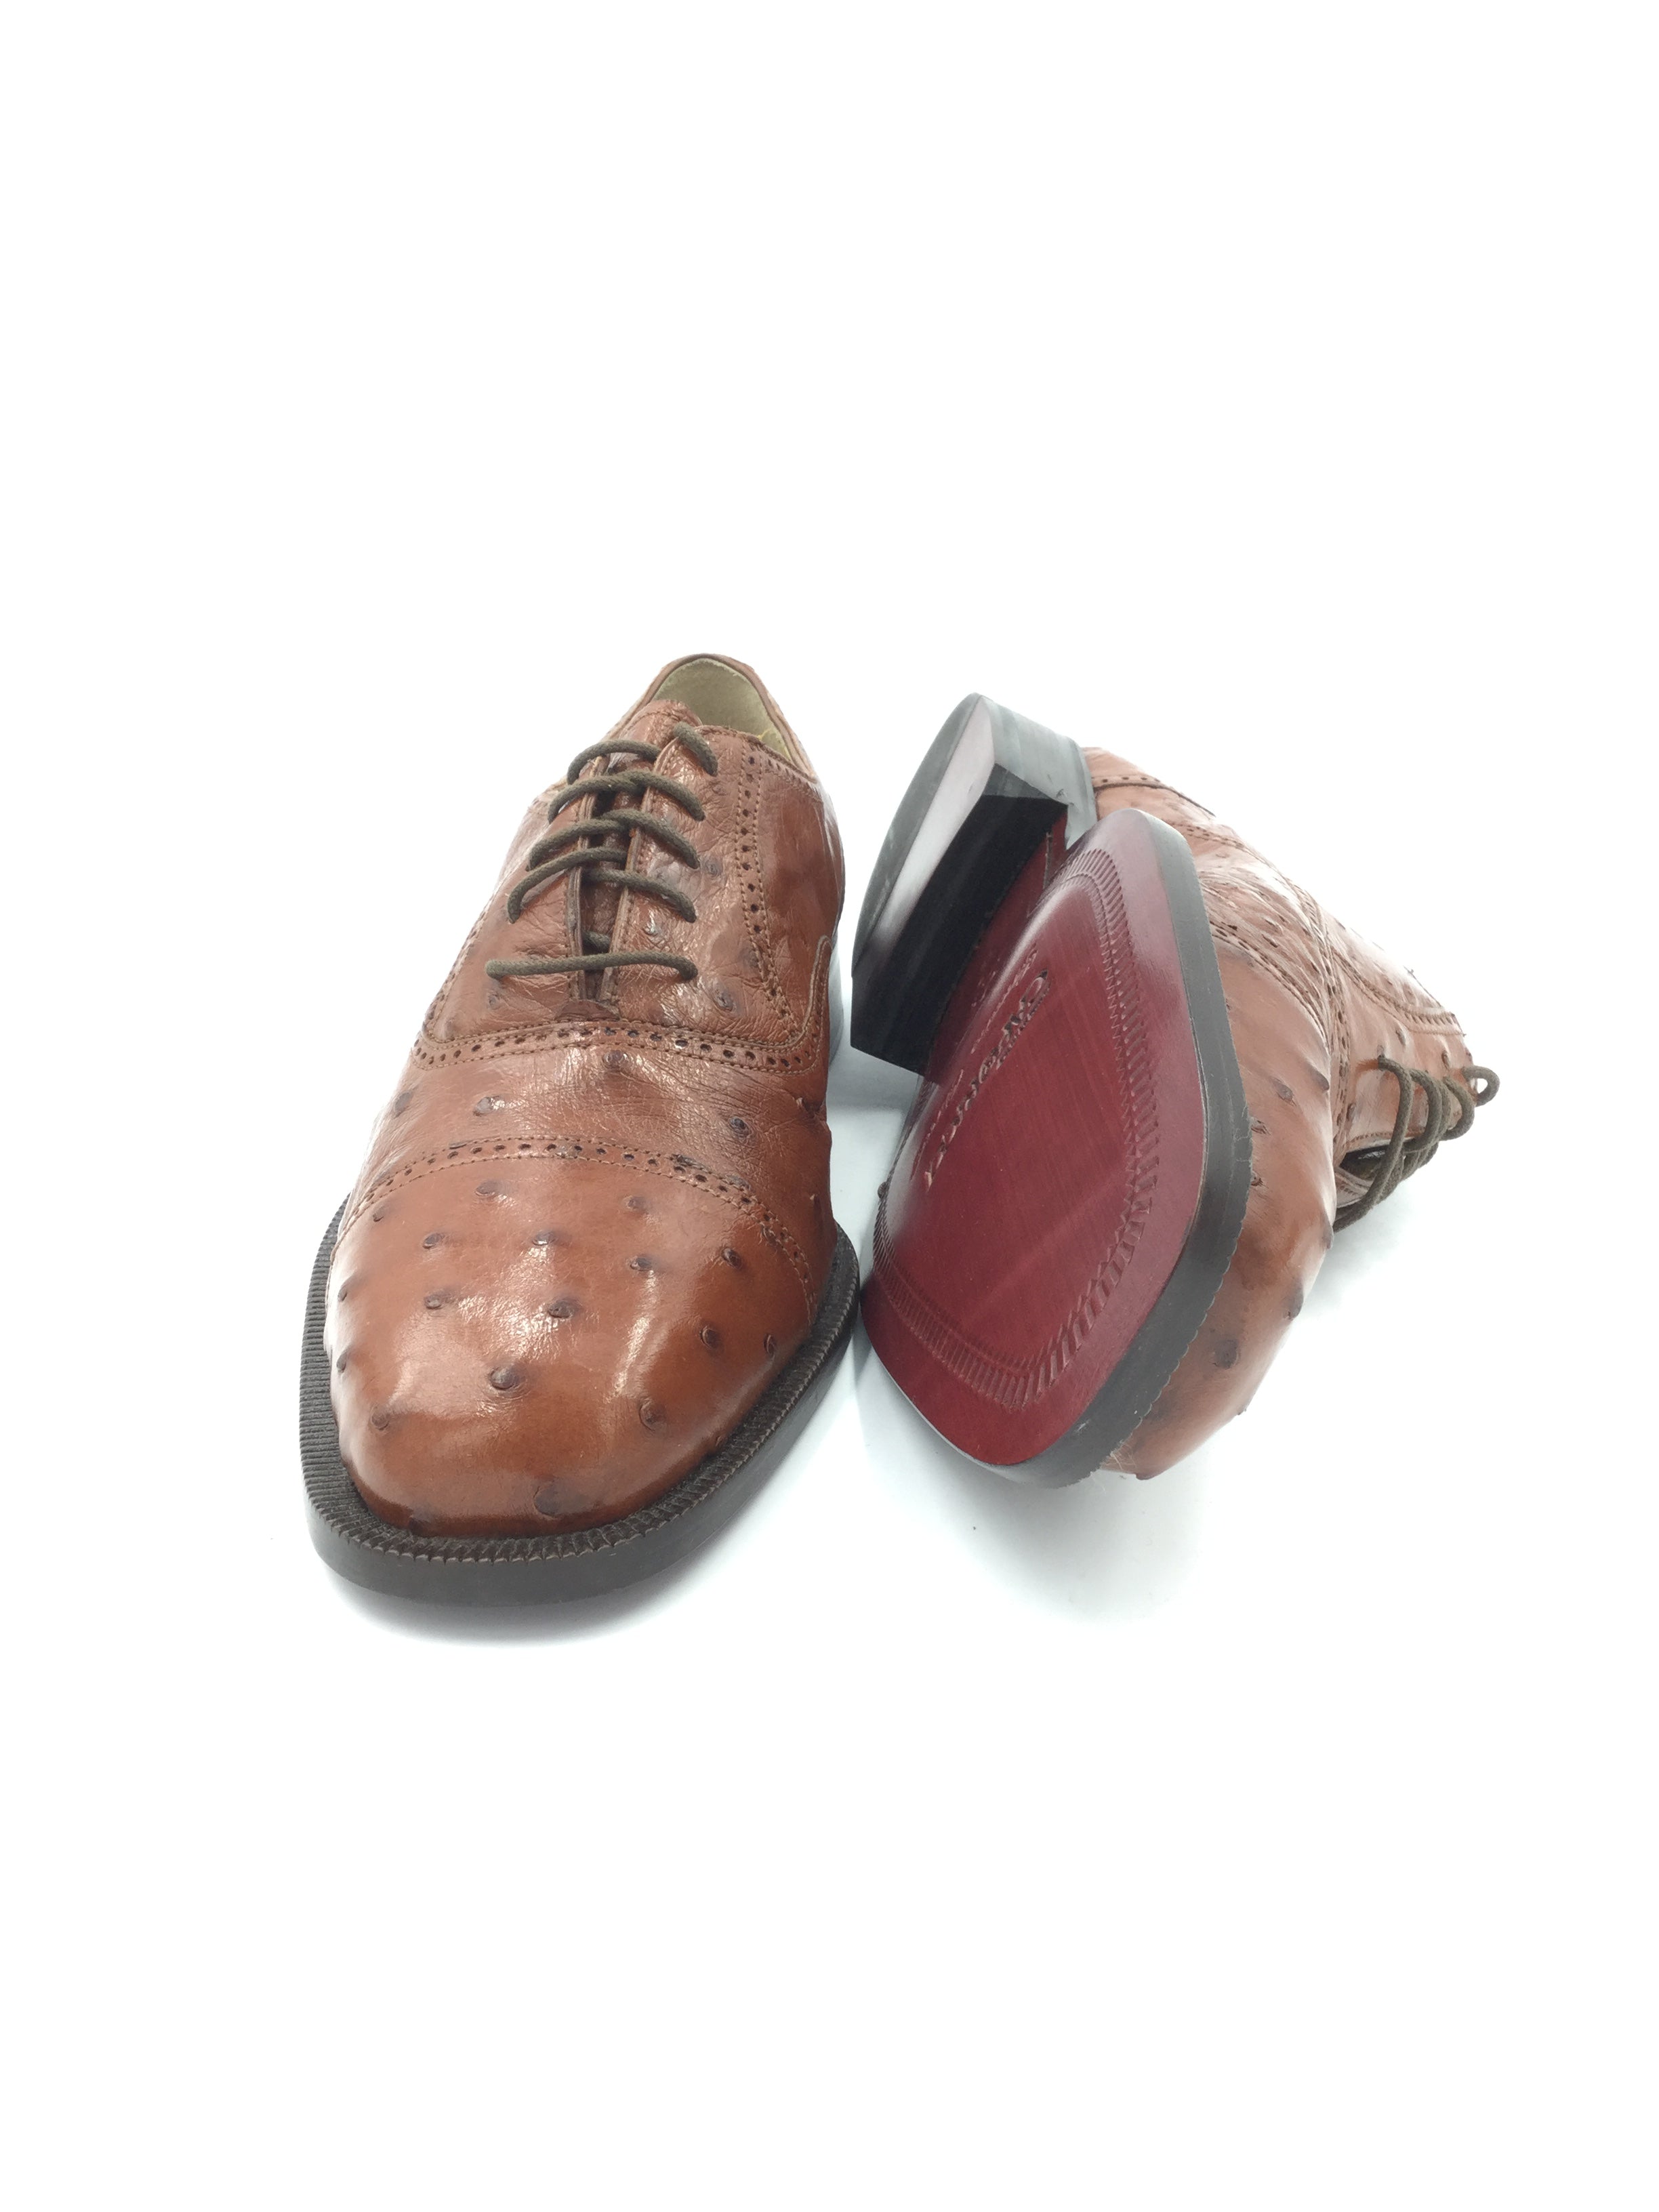 Caporicci Genuine Ostrich Leather Almond Shoe Size 10 W